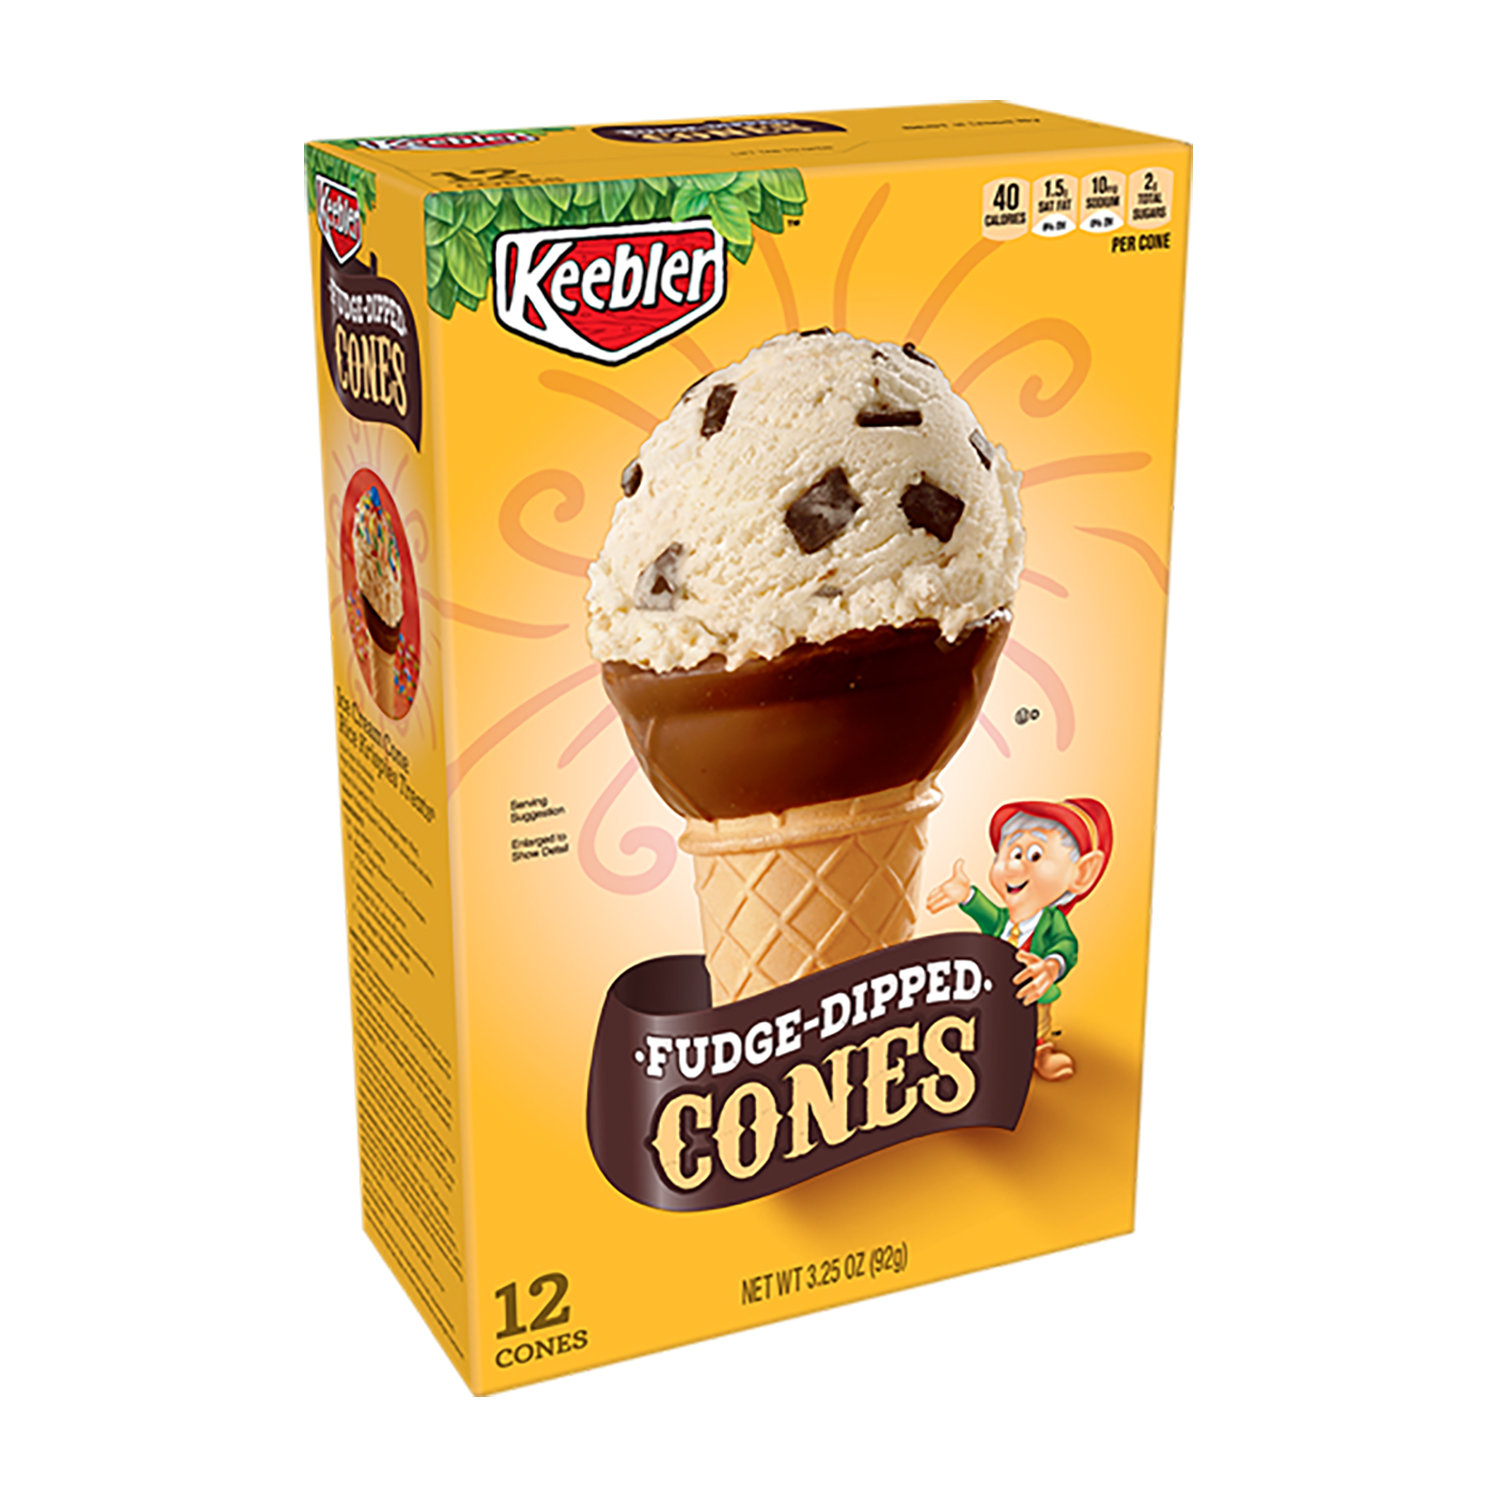 Cocoa PEBBLES Crunch'd Cereal: Crunchy & Bold Cocoa Flavor